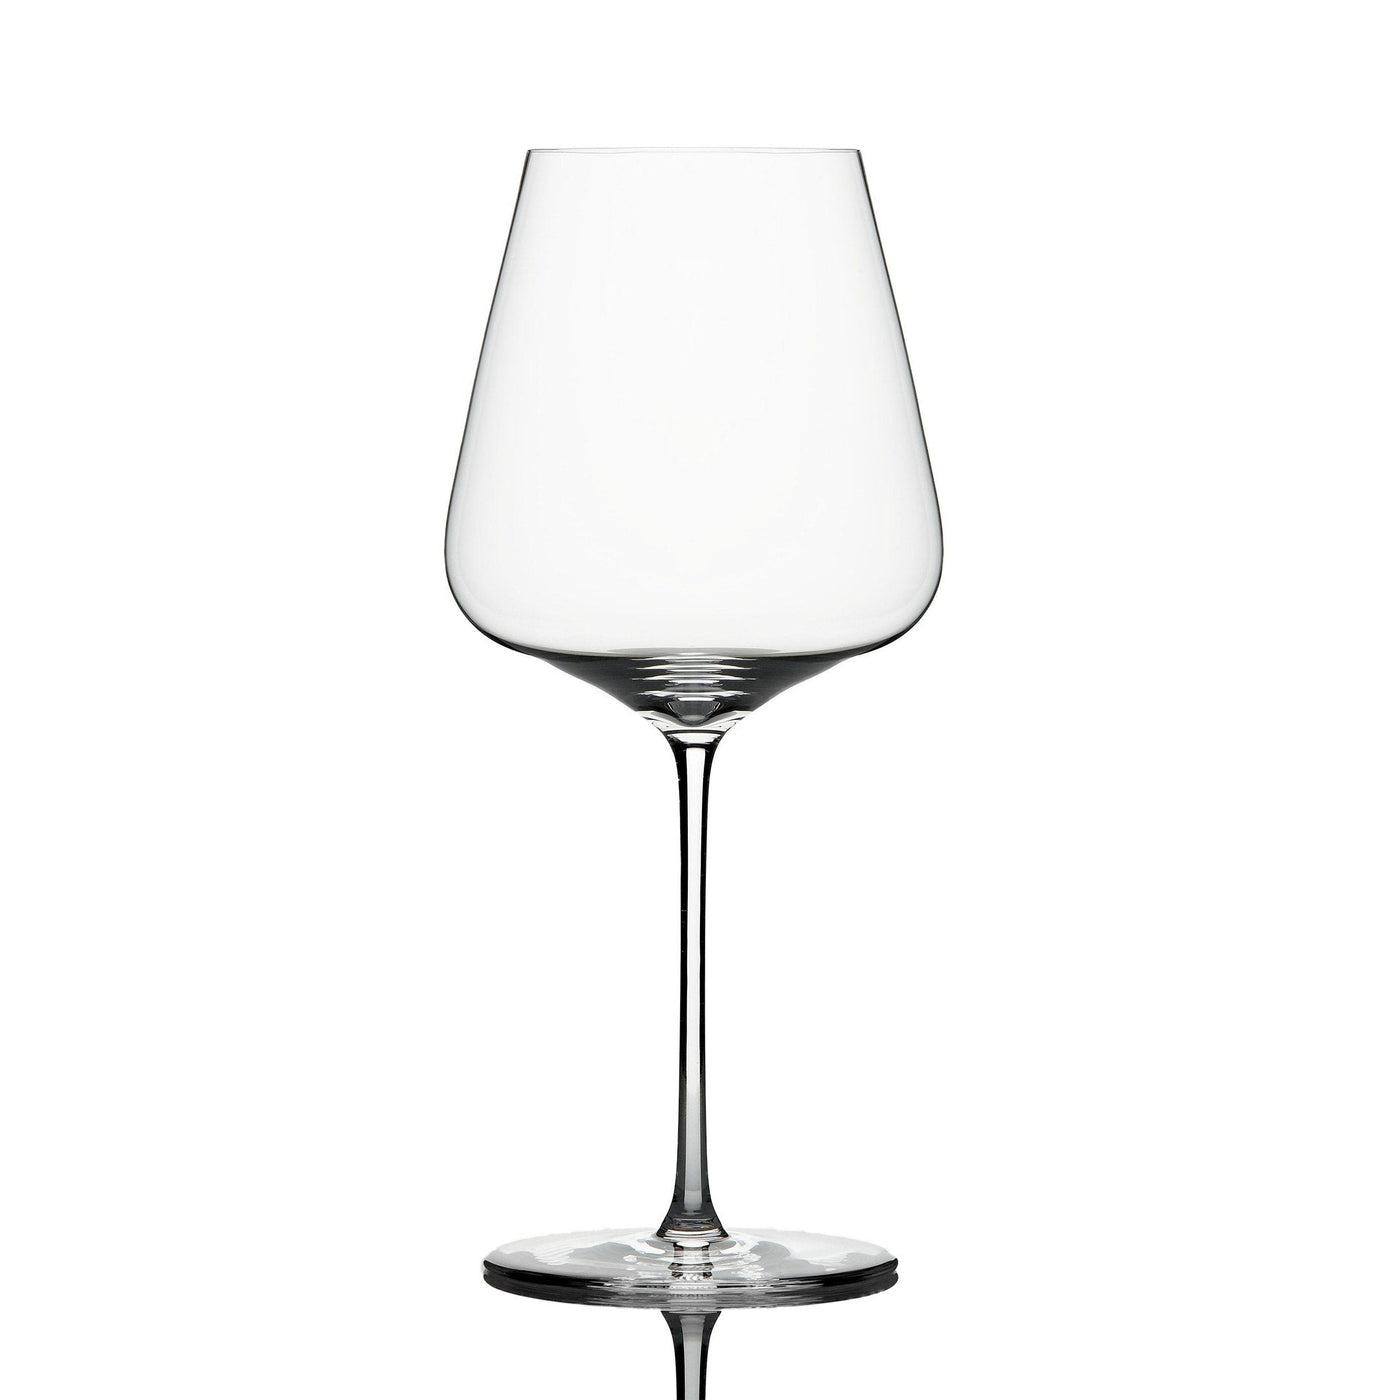 Zalto Denk Art Bordeaux glass